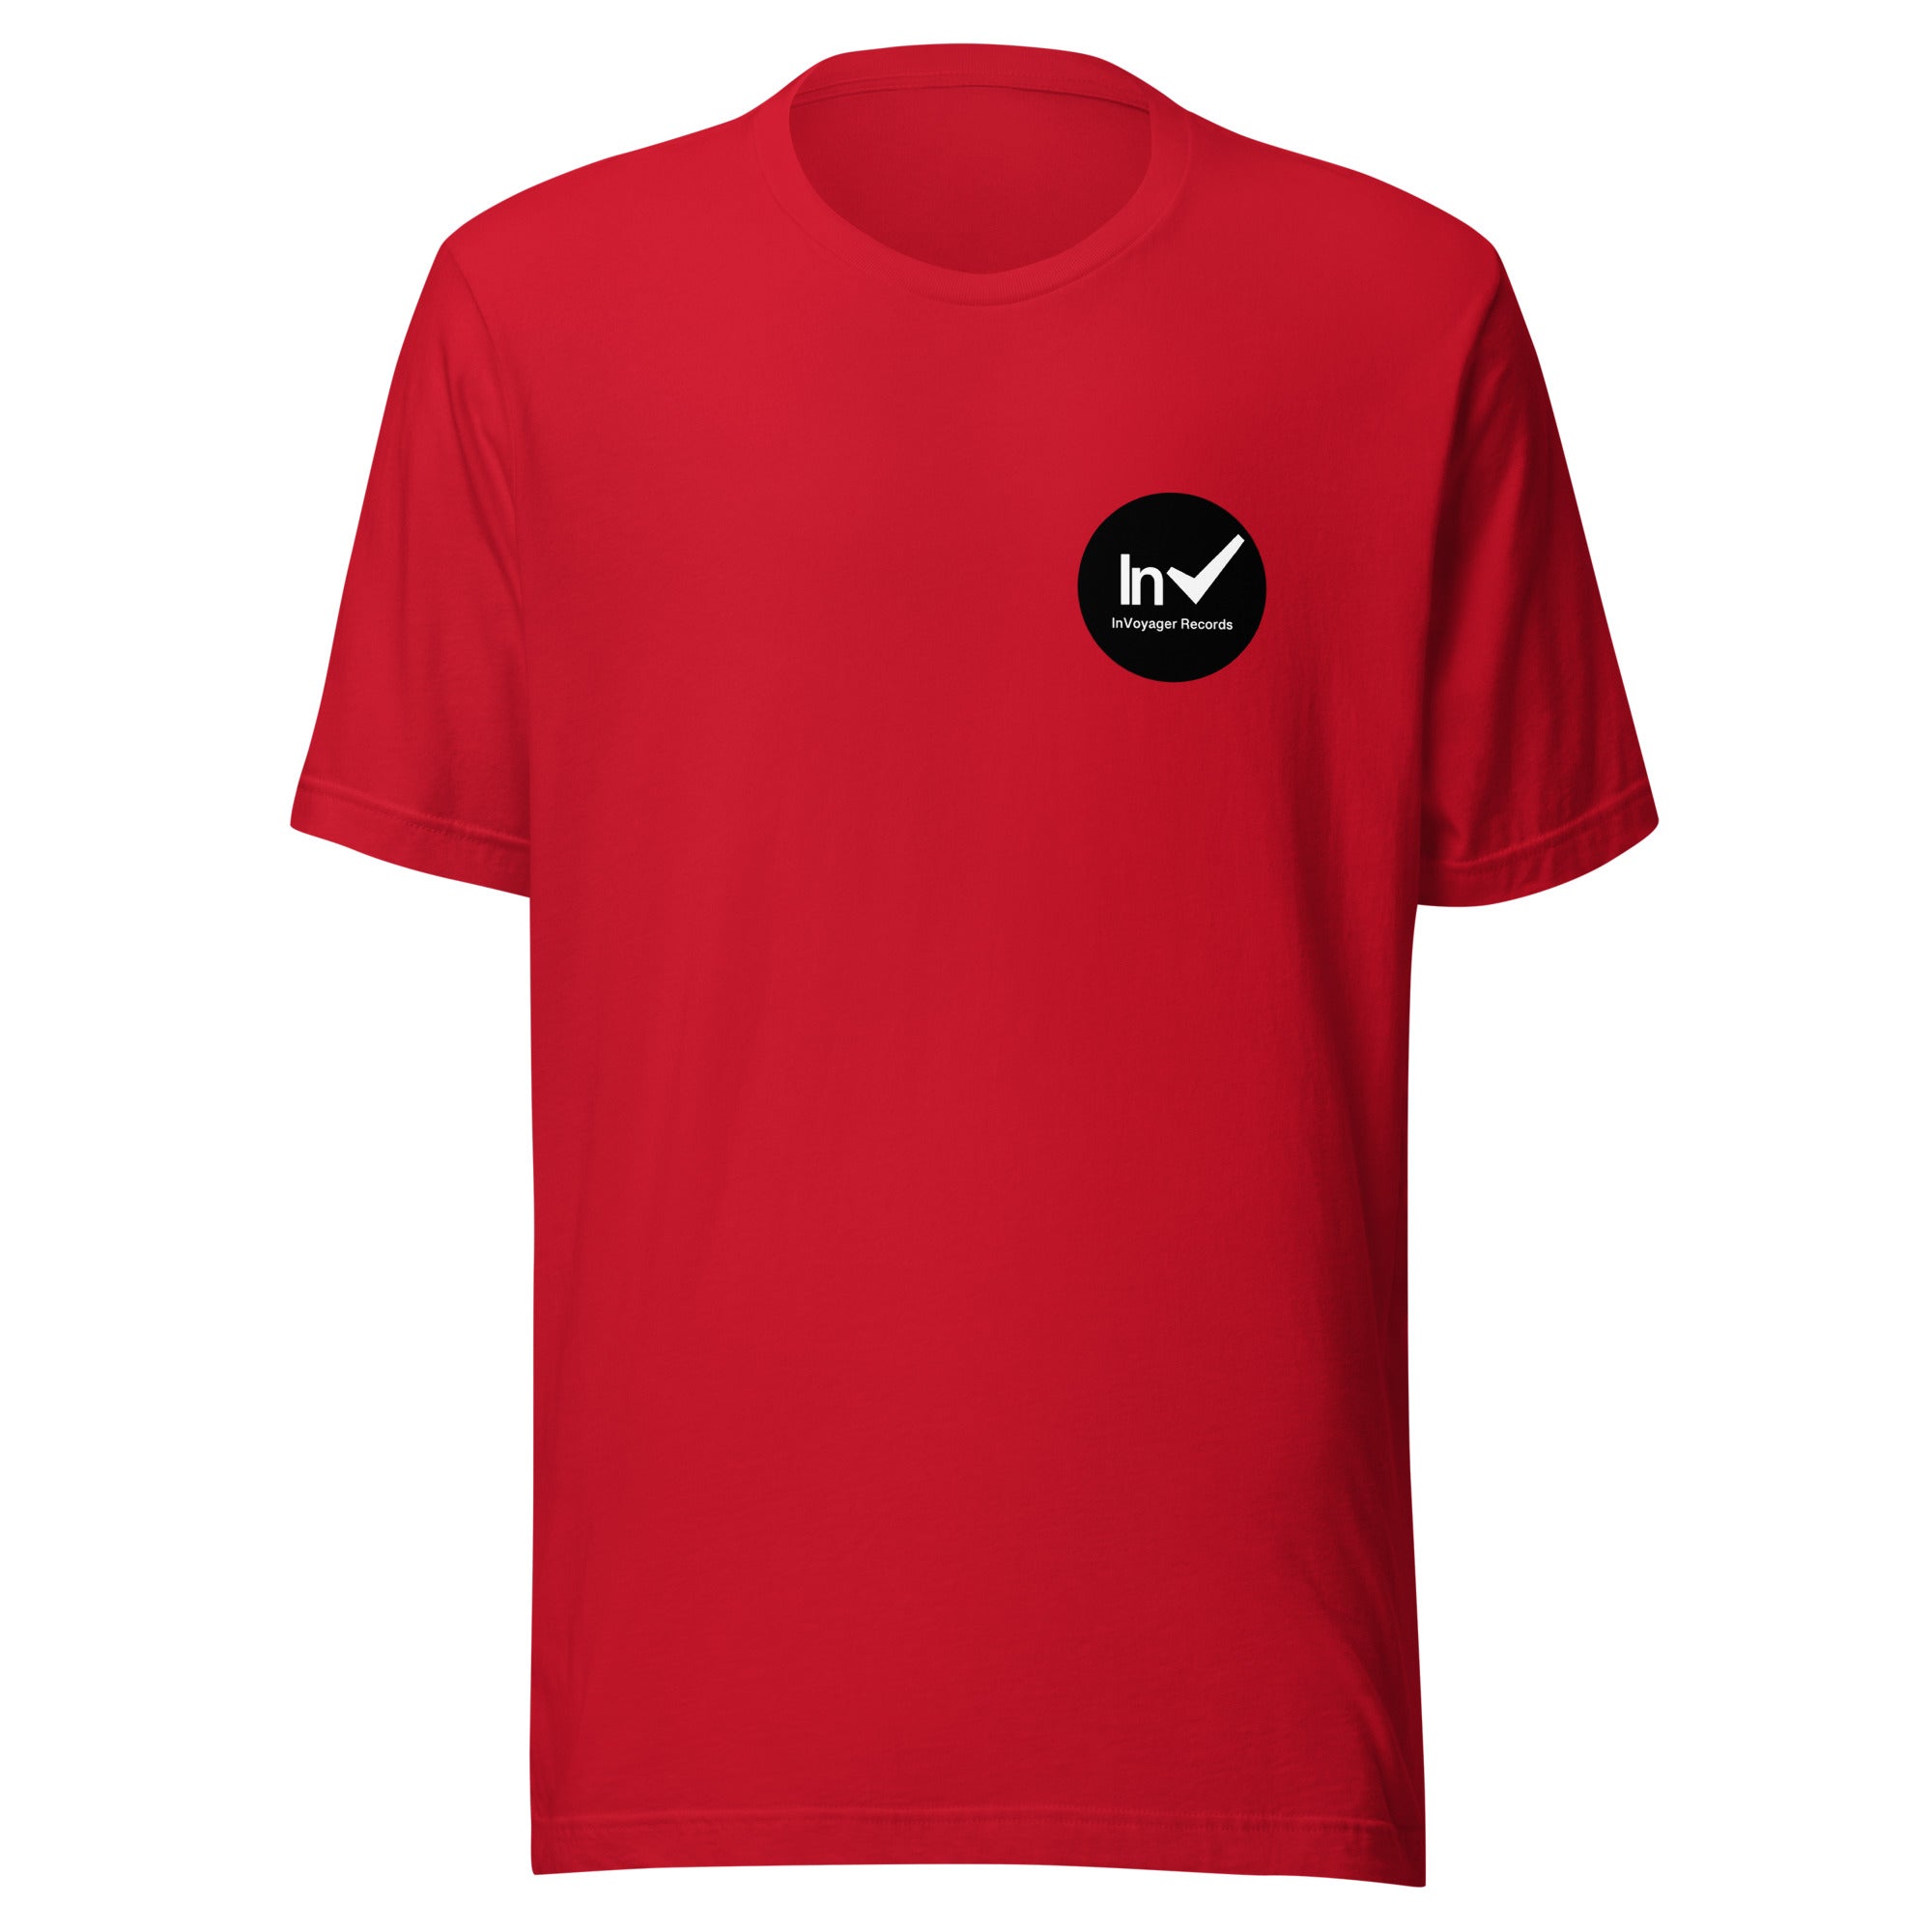 DAMIAN LEMAR HUDSON - Unisex t-shirt